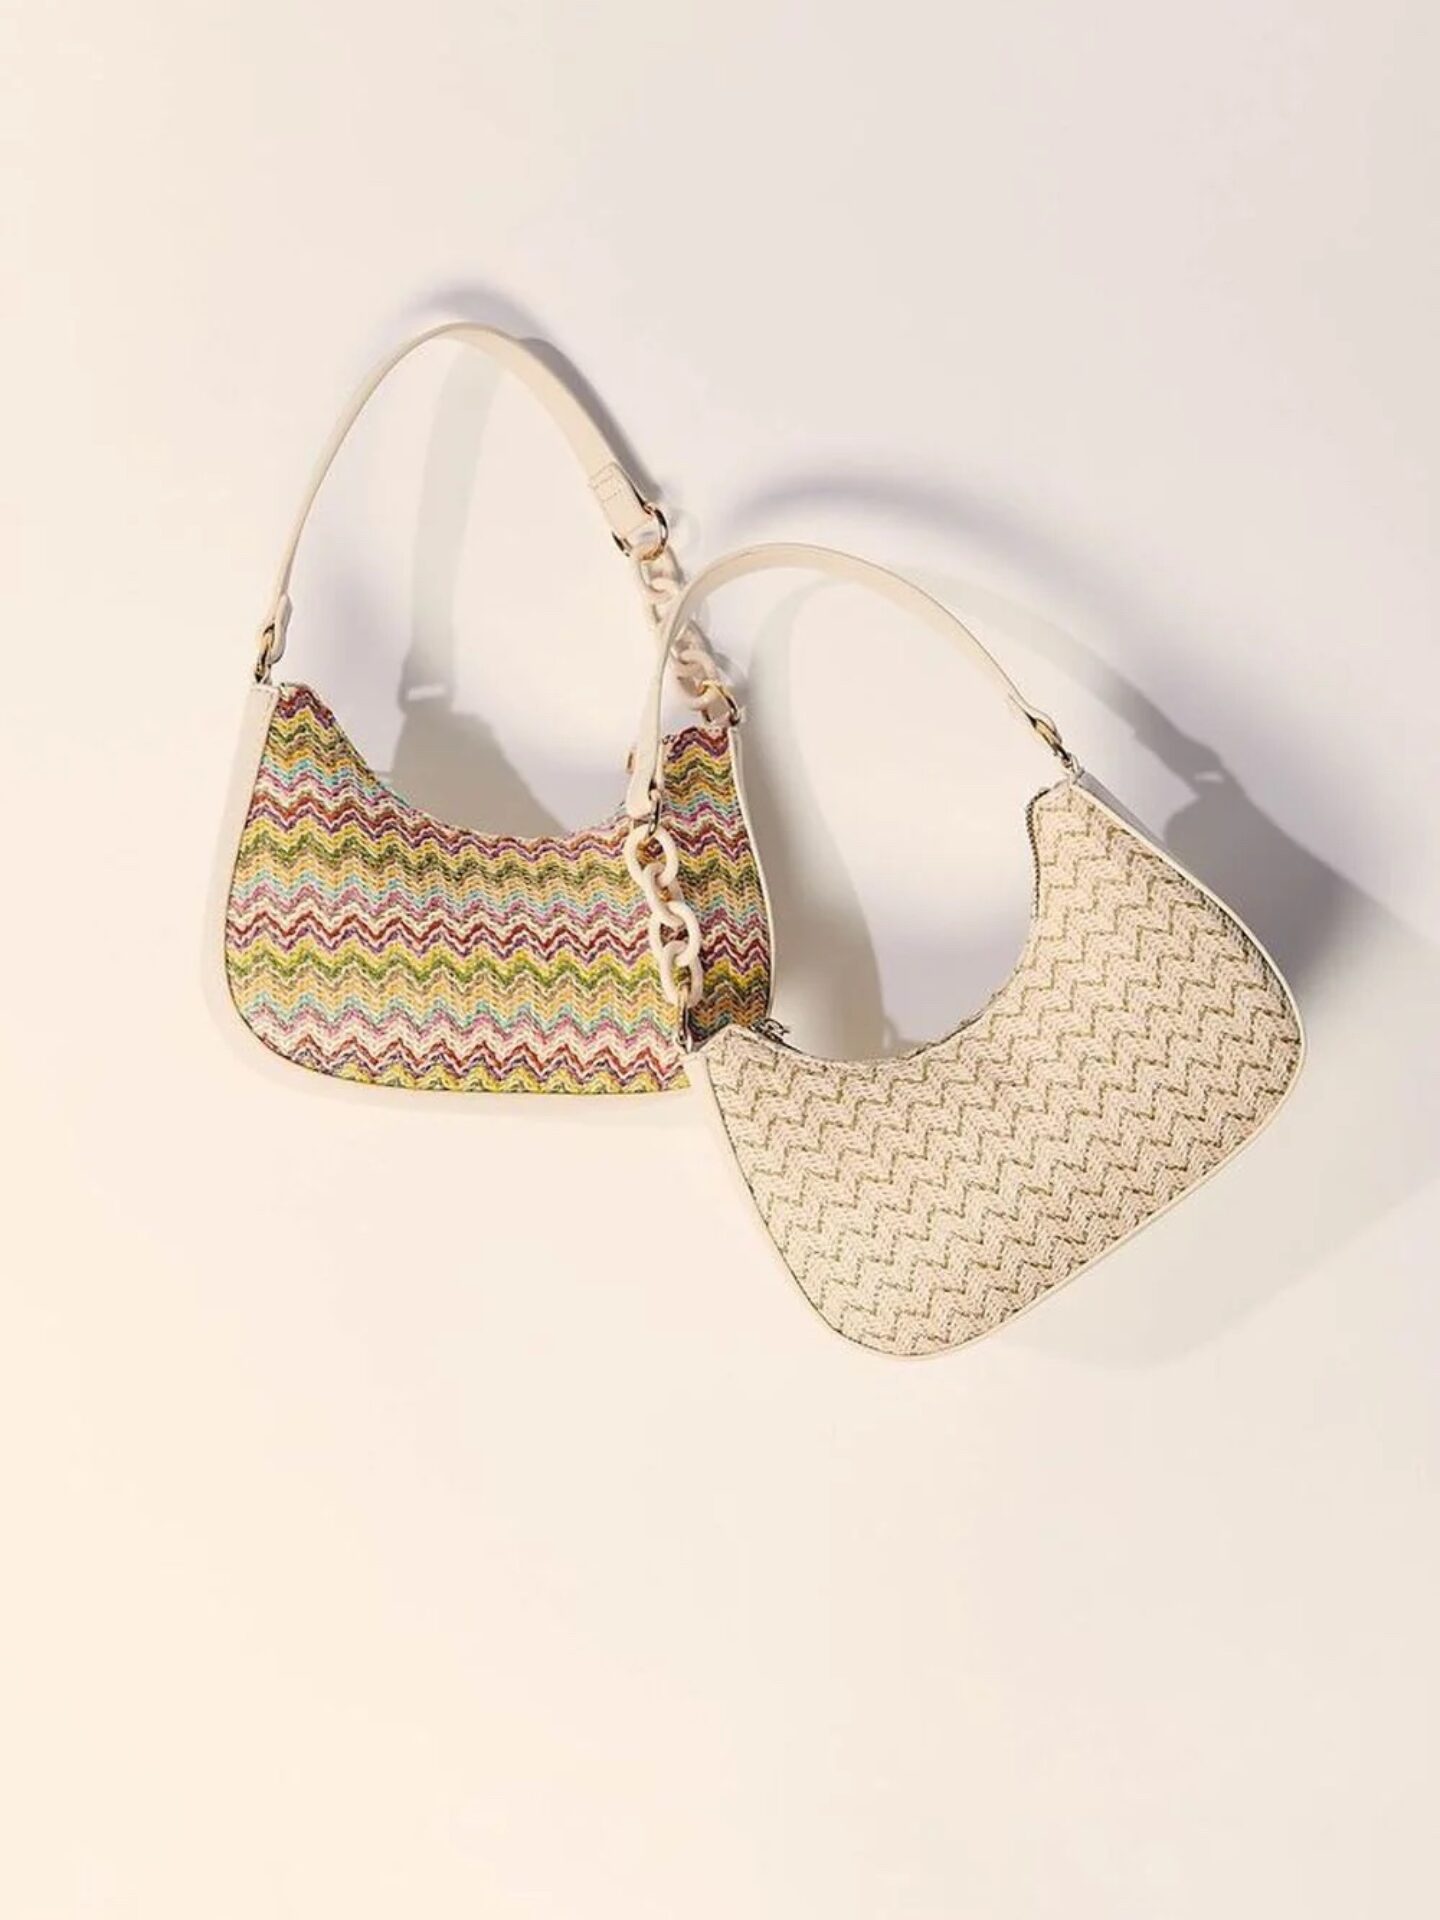 Minimalist Baguette Bag With Chain Handle, SHEIN USA